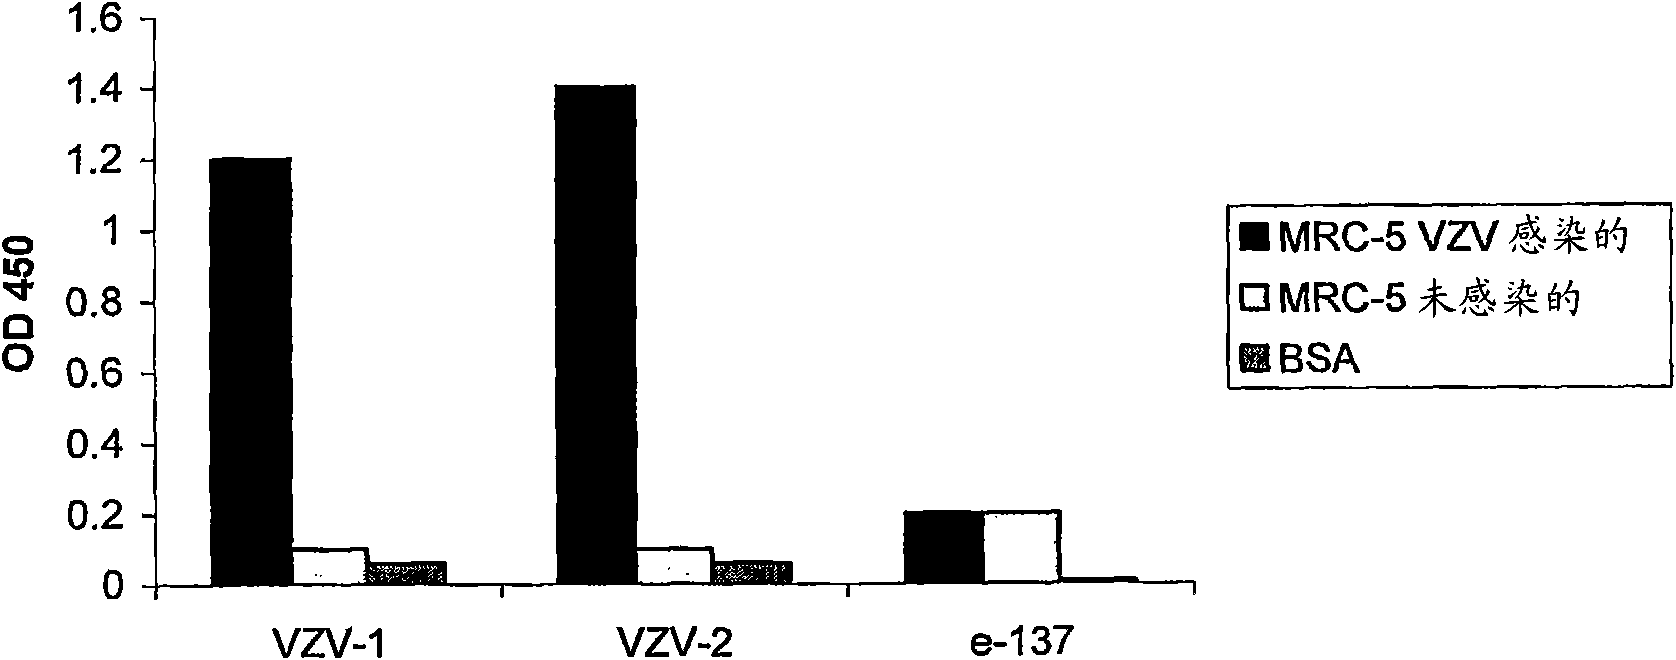 Antibodies specific for varicella zoster virus